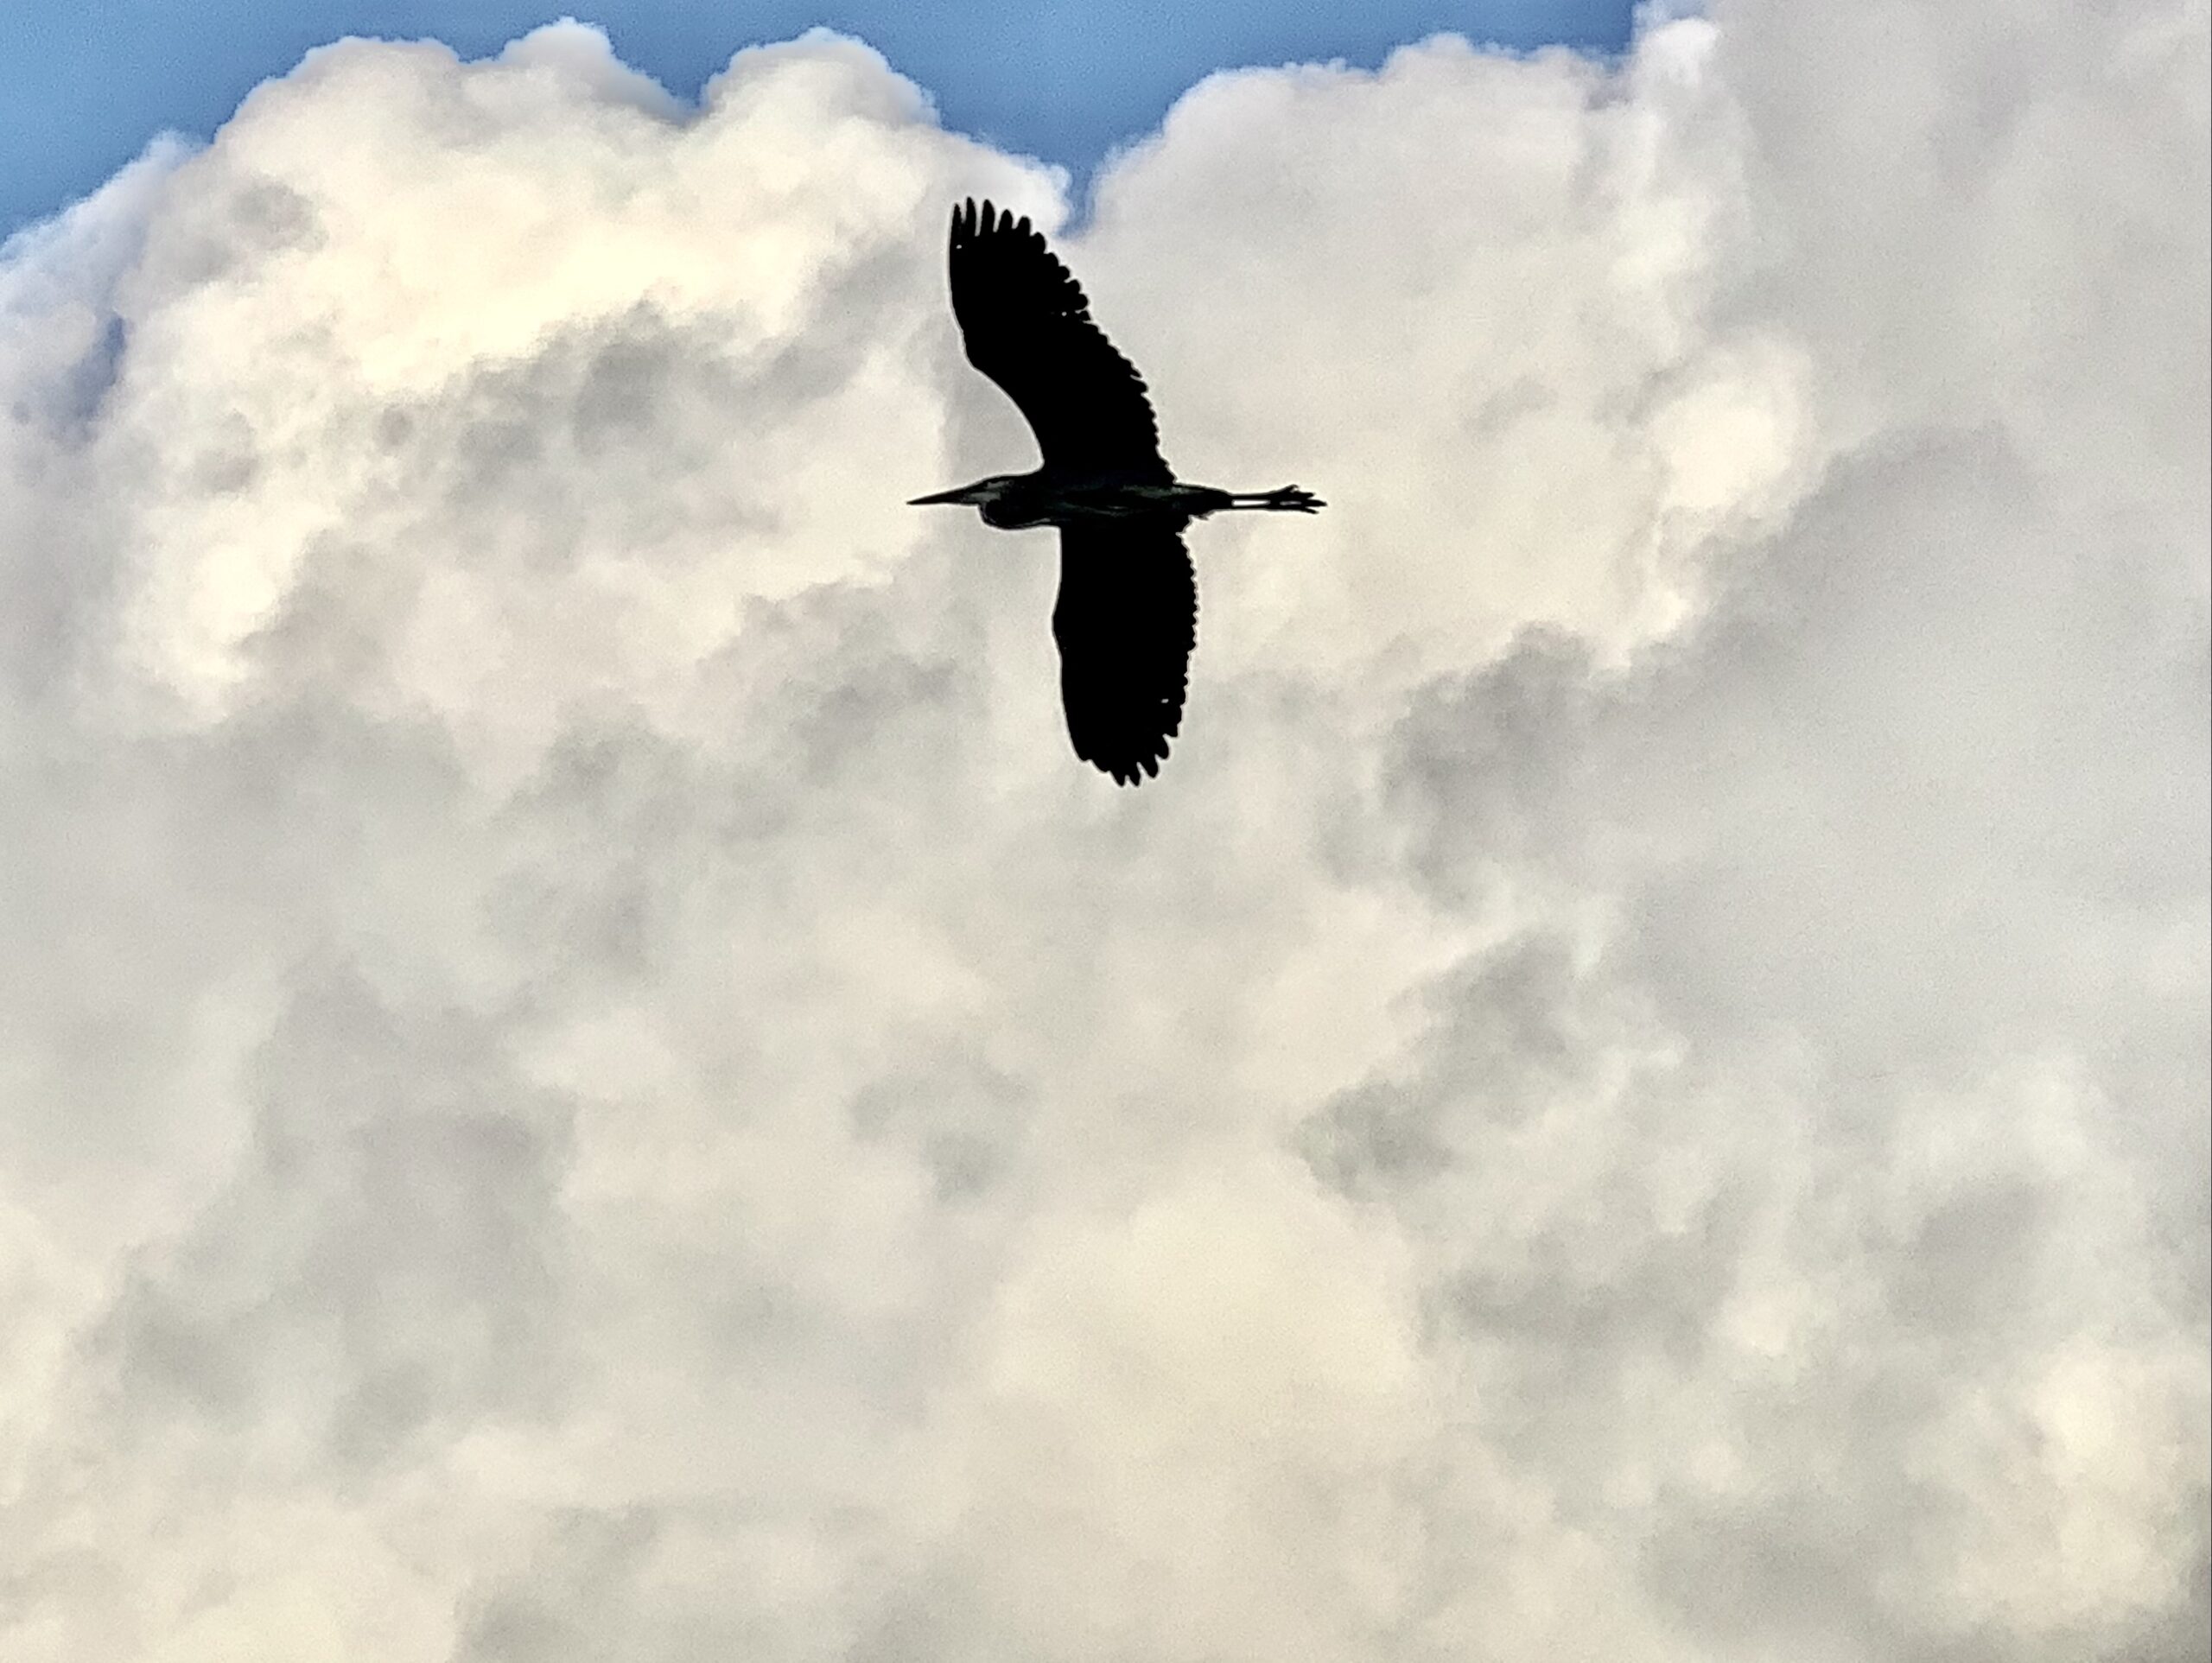 A bird flies through a cloudy sky.